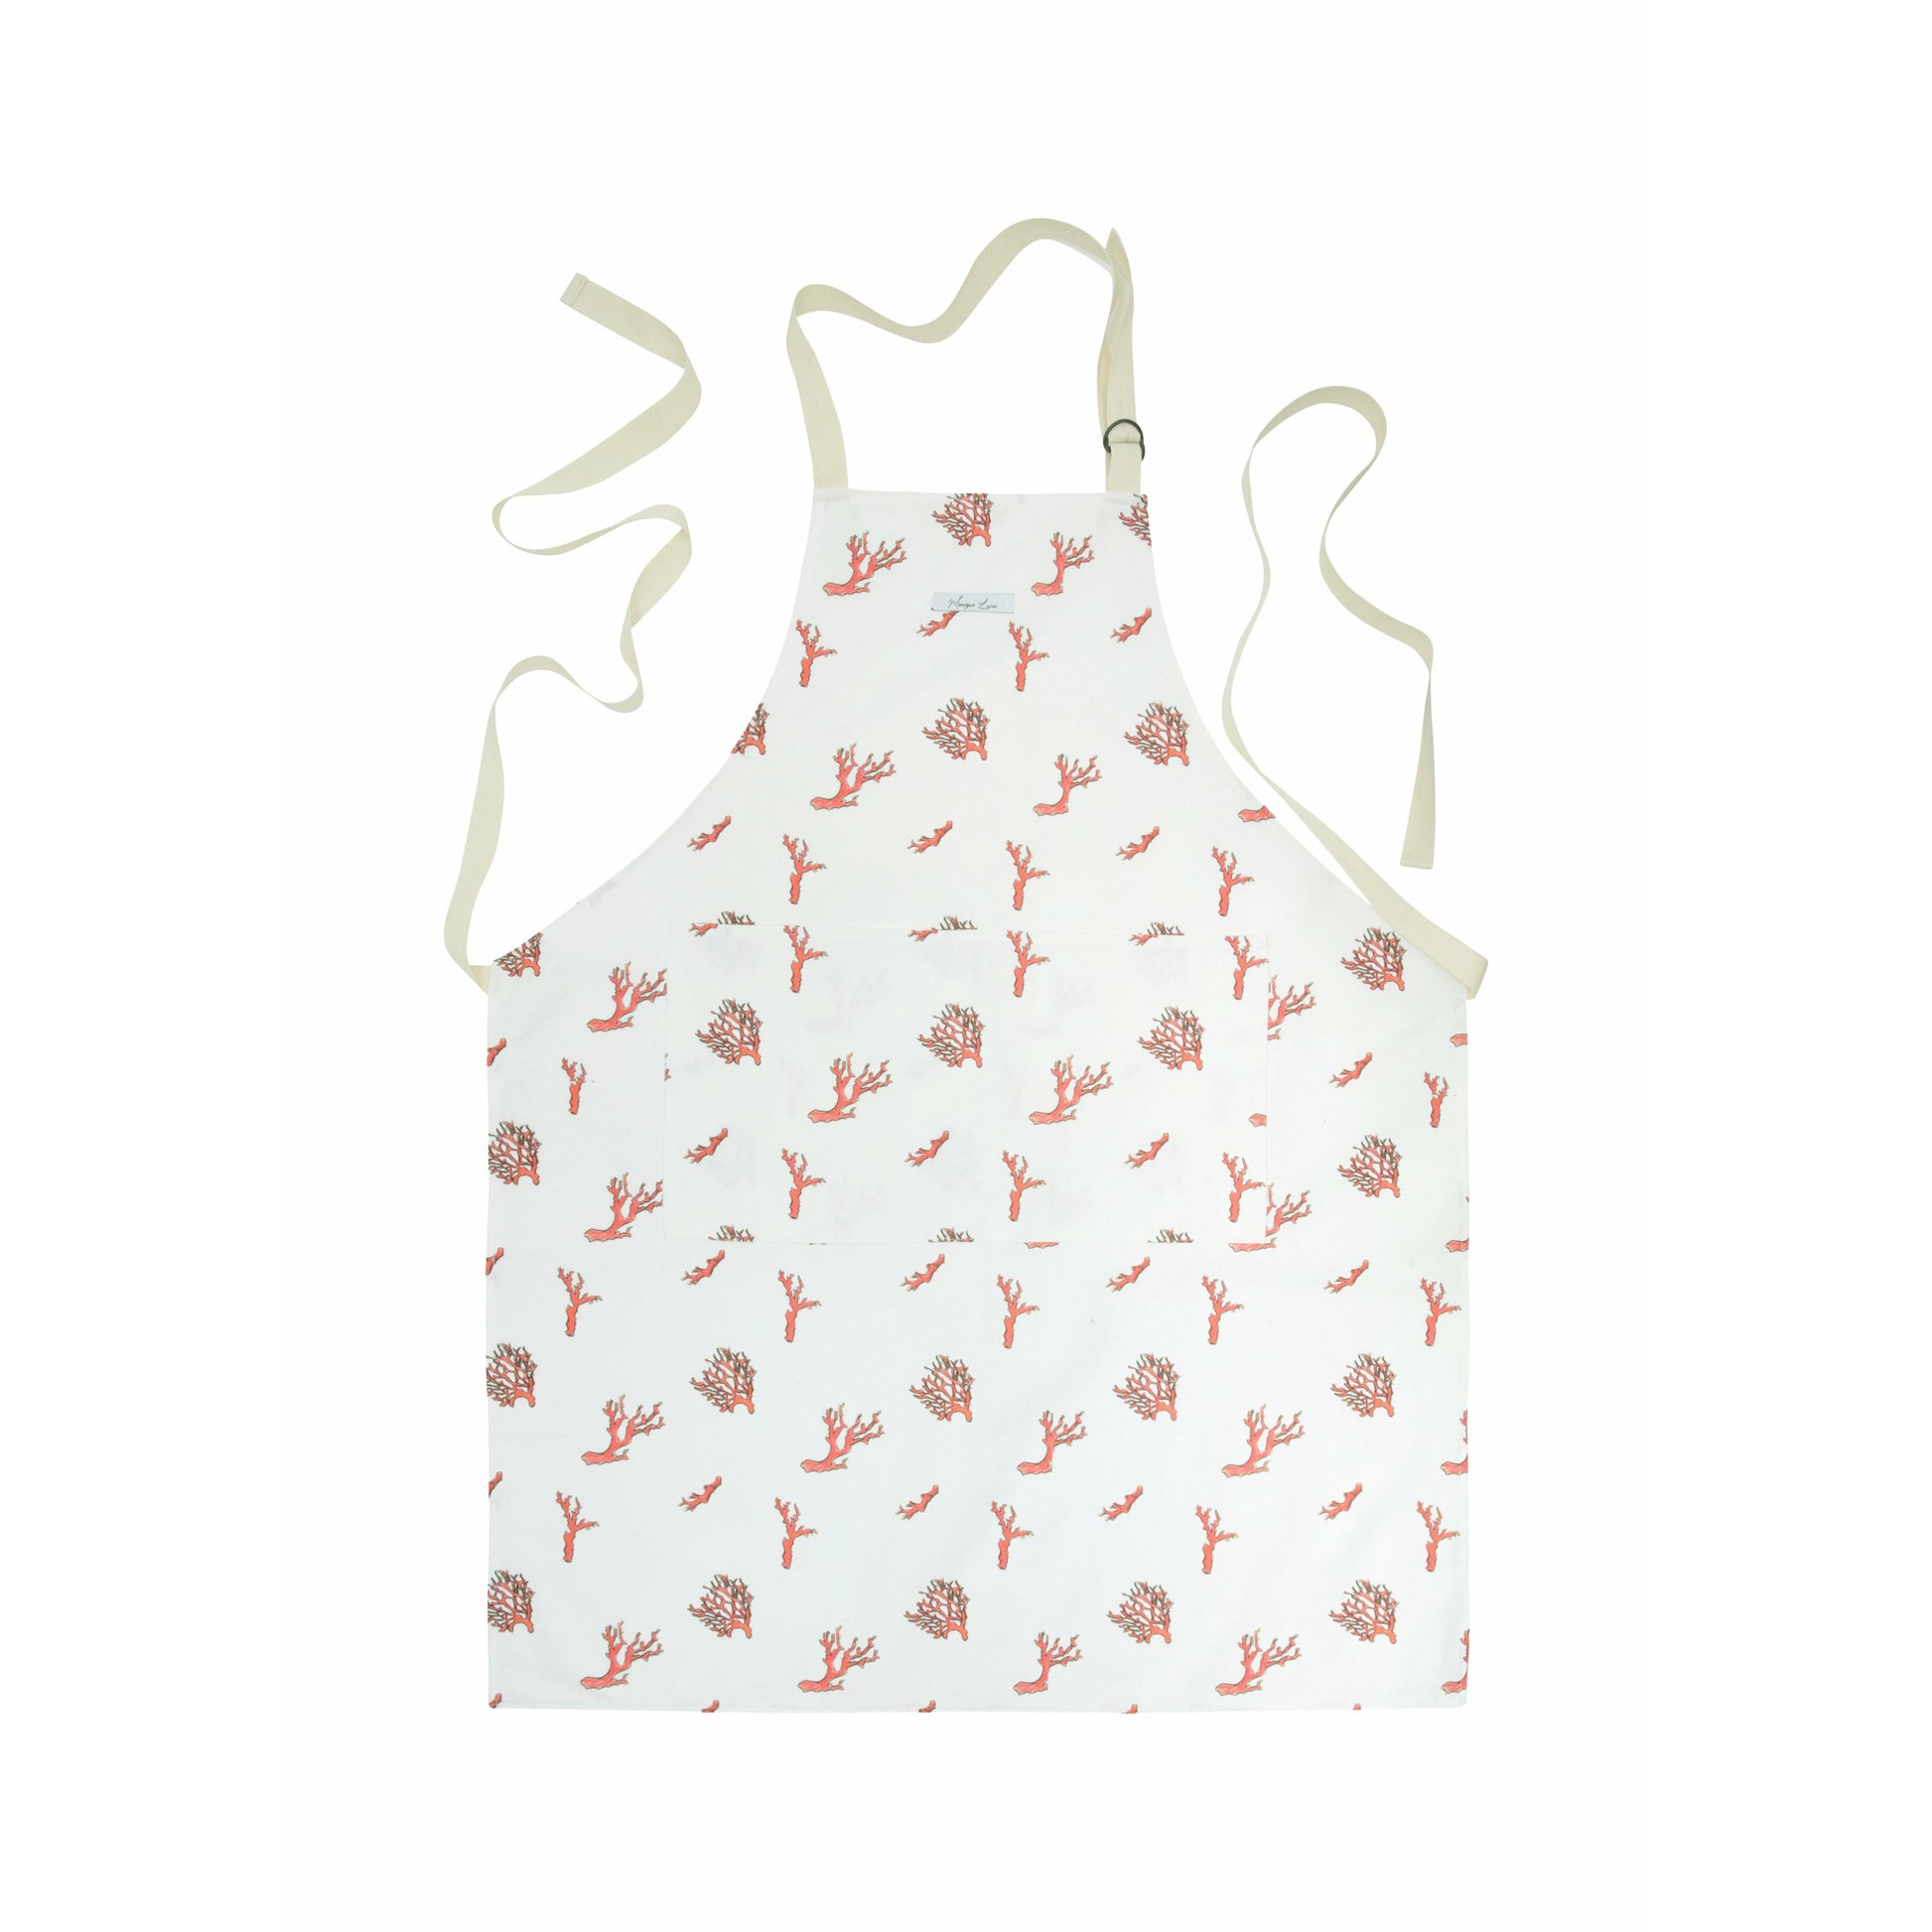 Coral print apron on white backround 